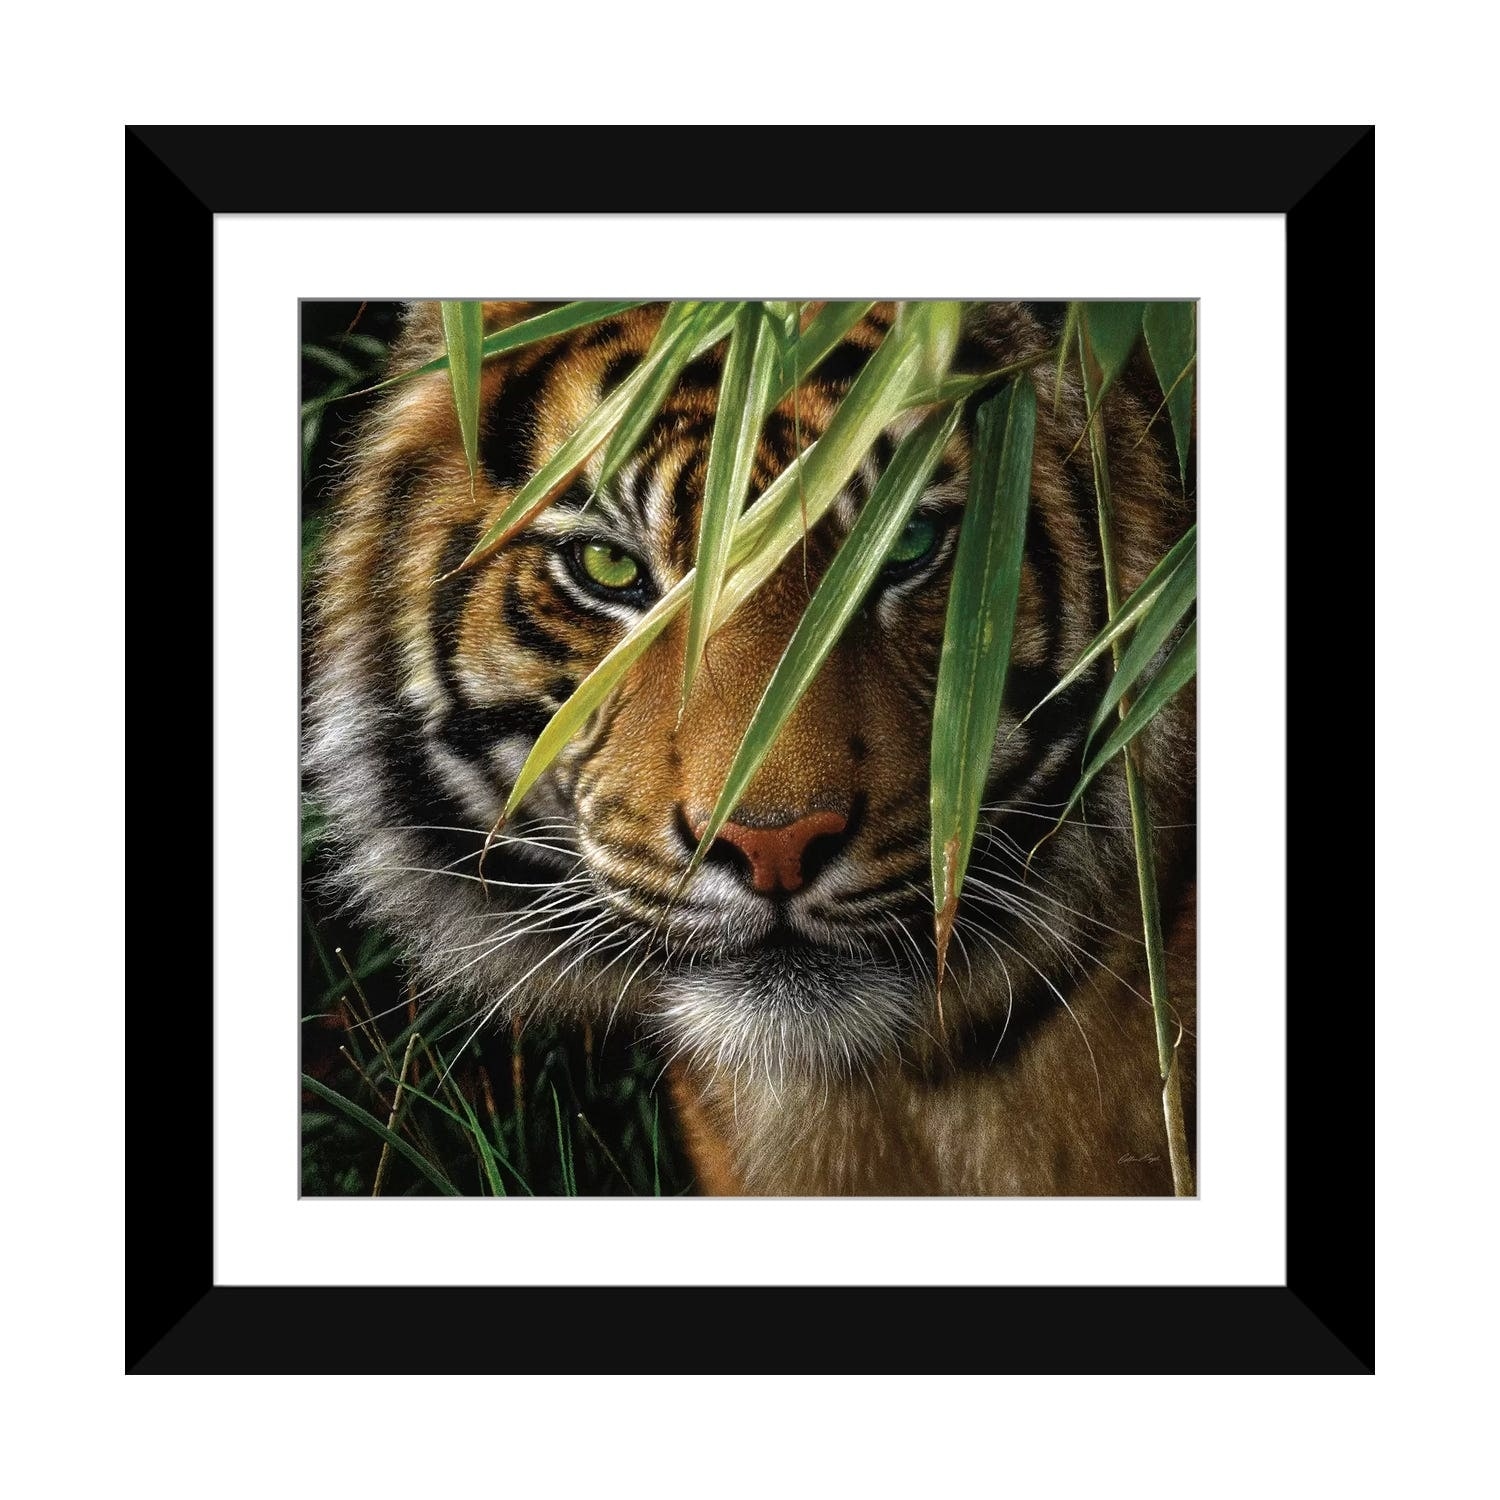 iCanvas Tiger - Emerald Forest by Collin Bogle - Bed Bath